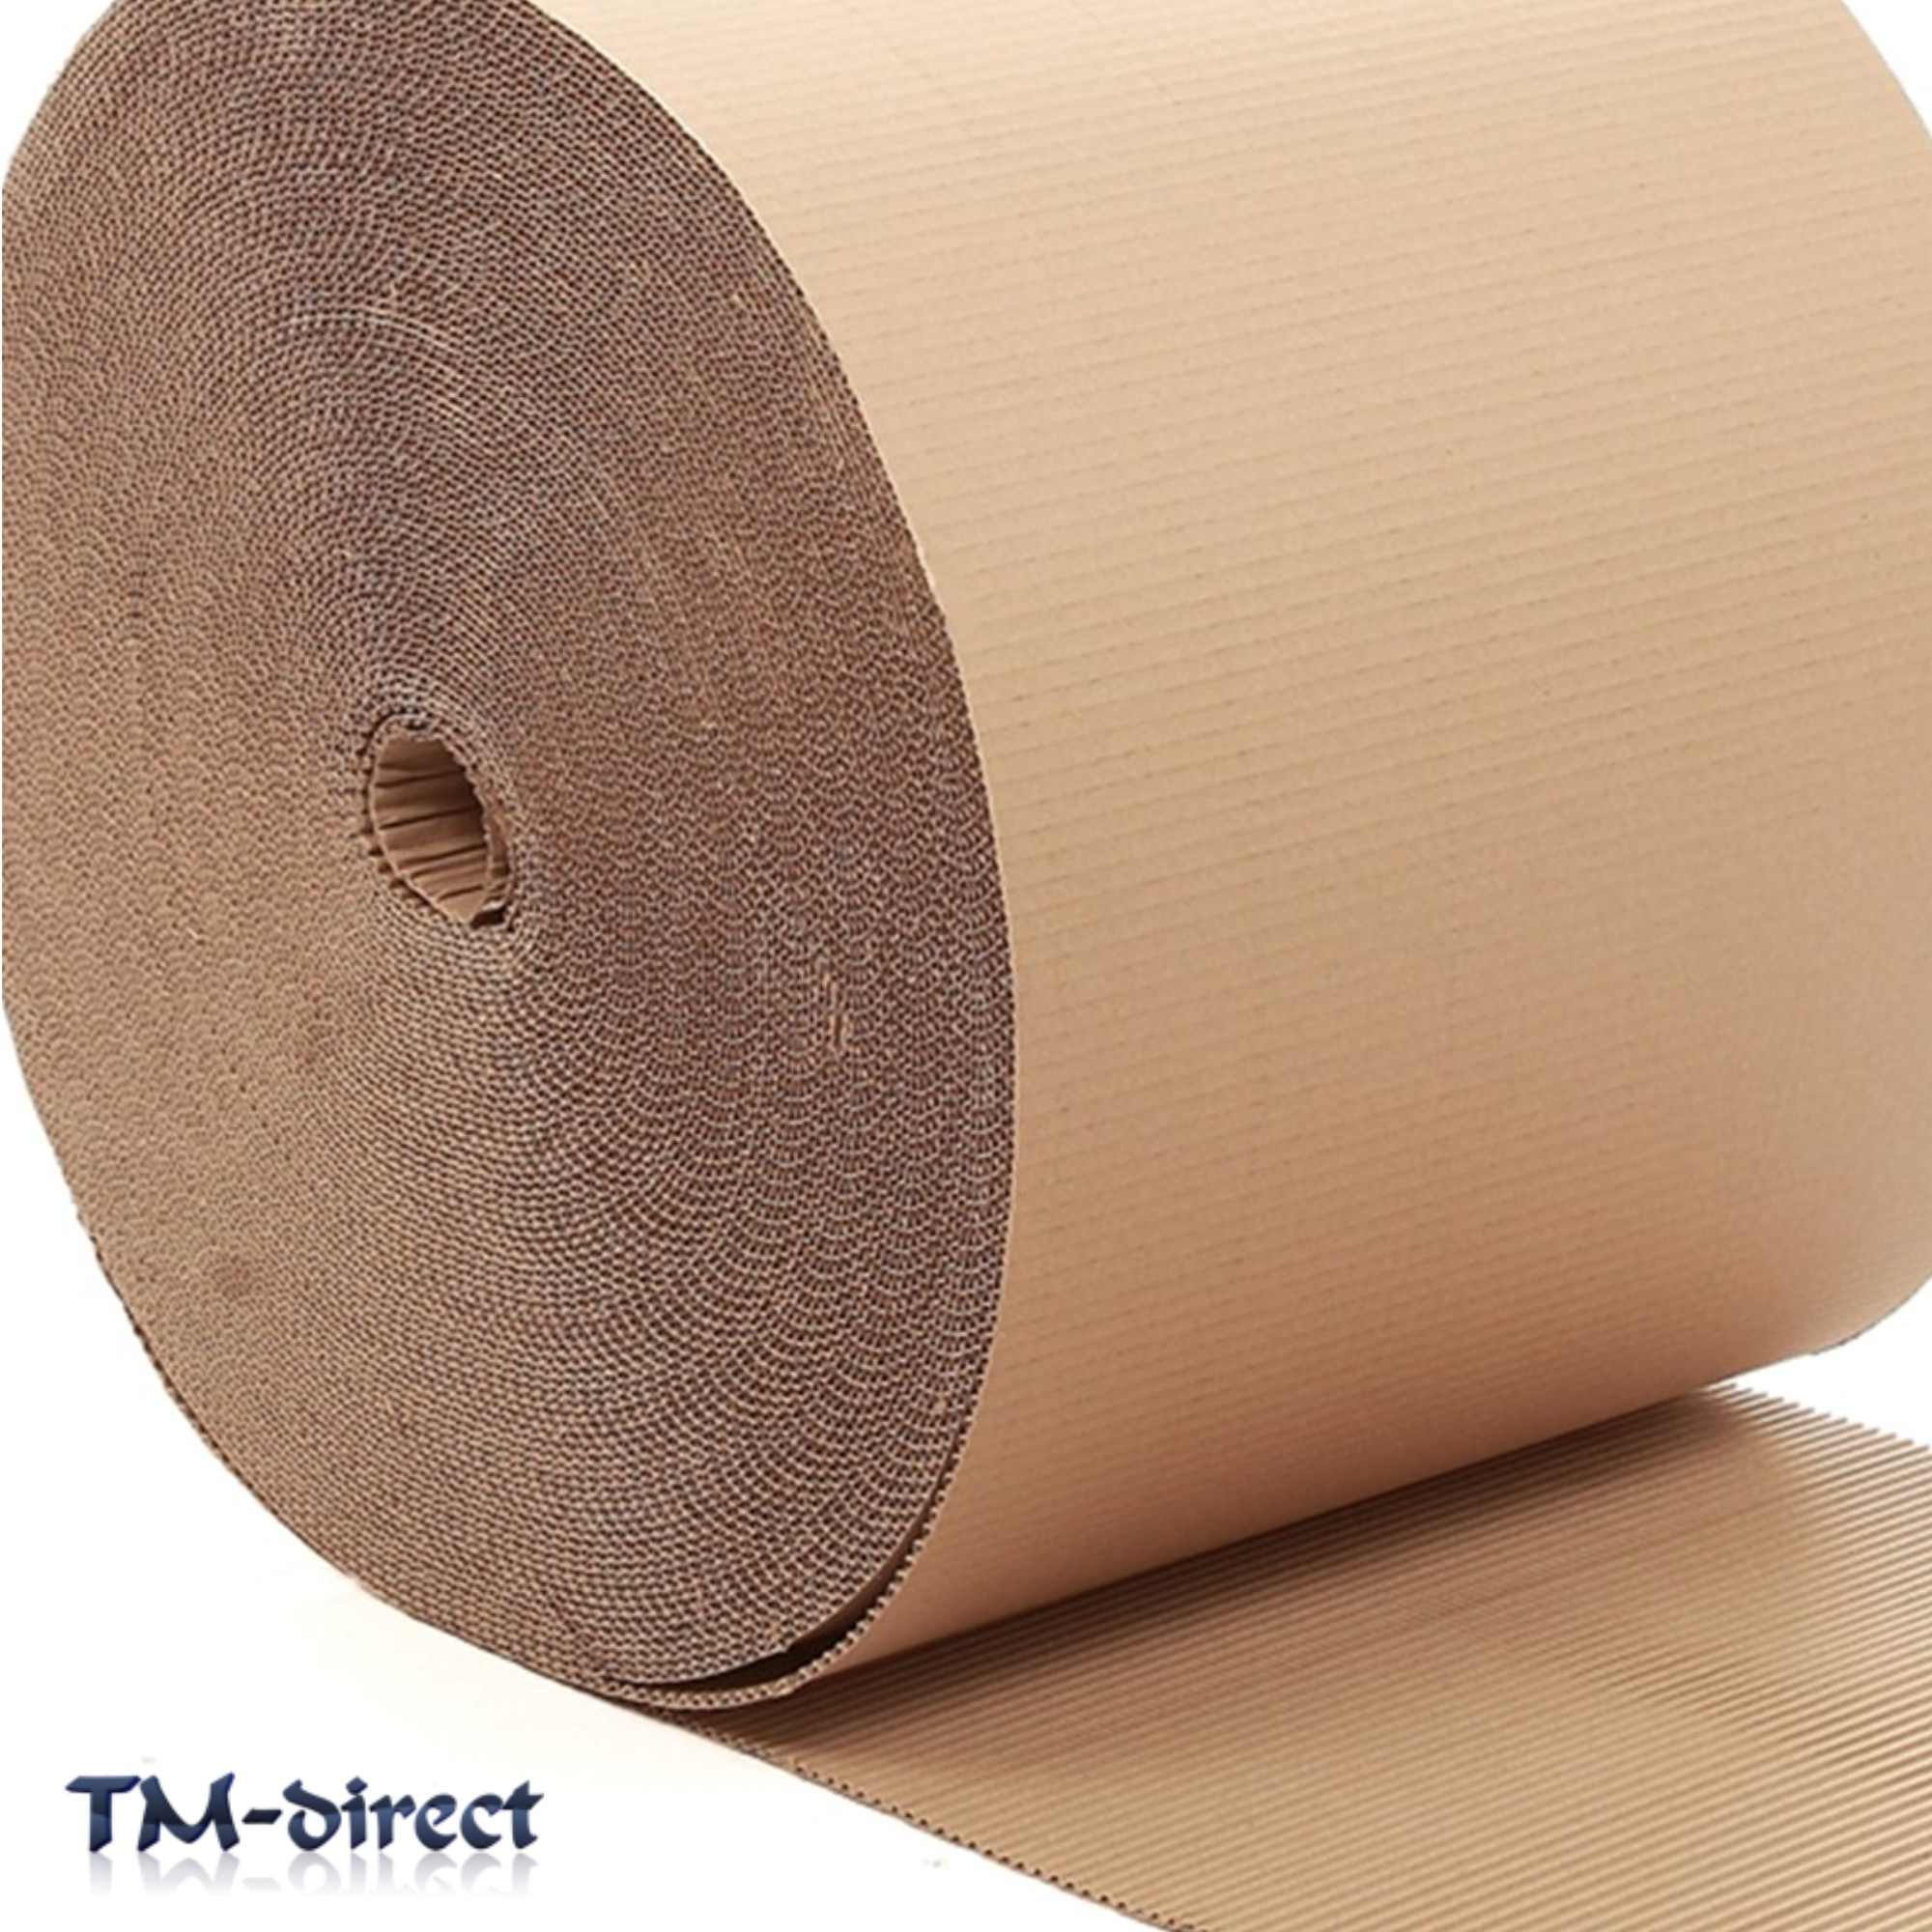 300 500 600 750 900 x 5m 10 25 75m Corrugated Cardboard Paper Rolls All Sizes 